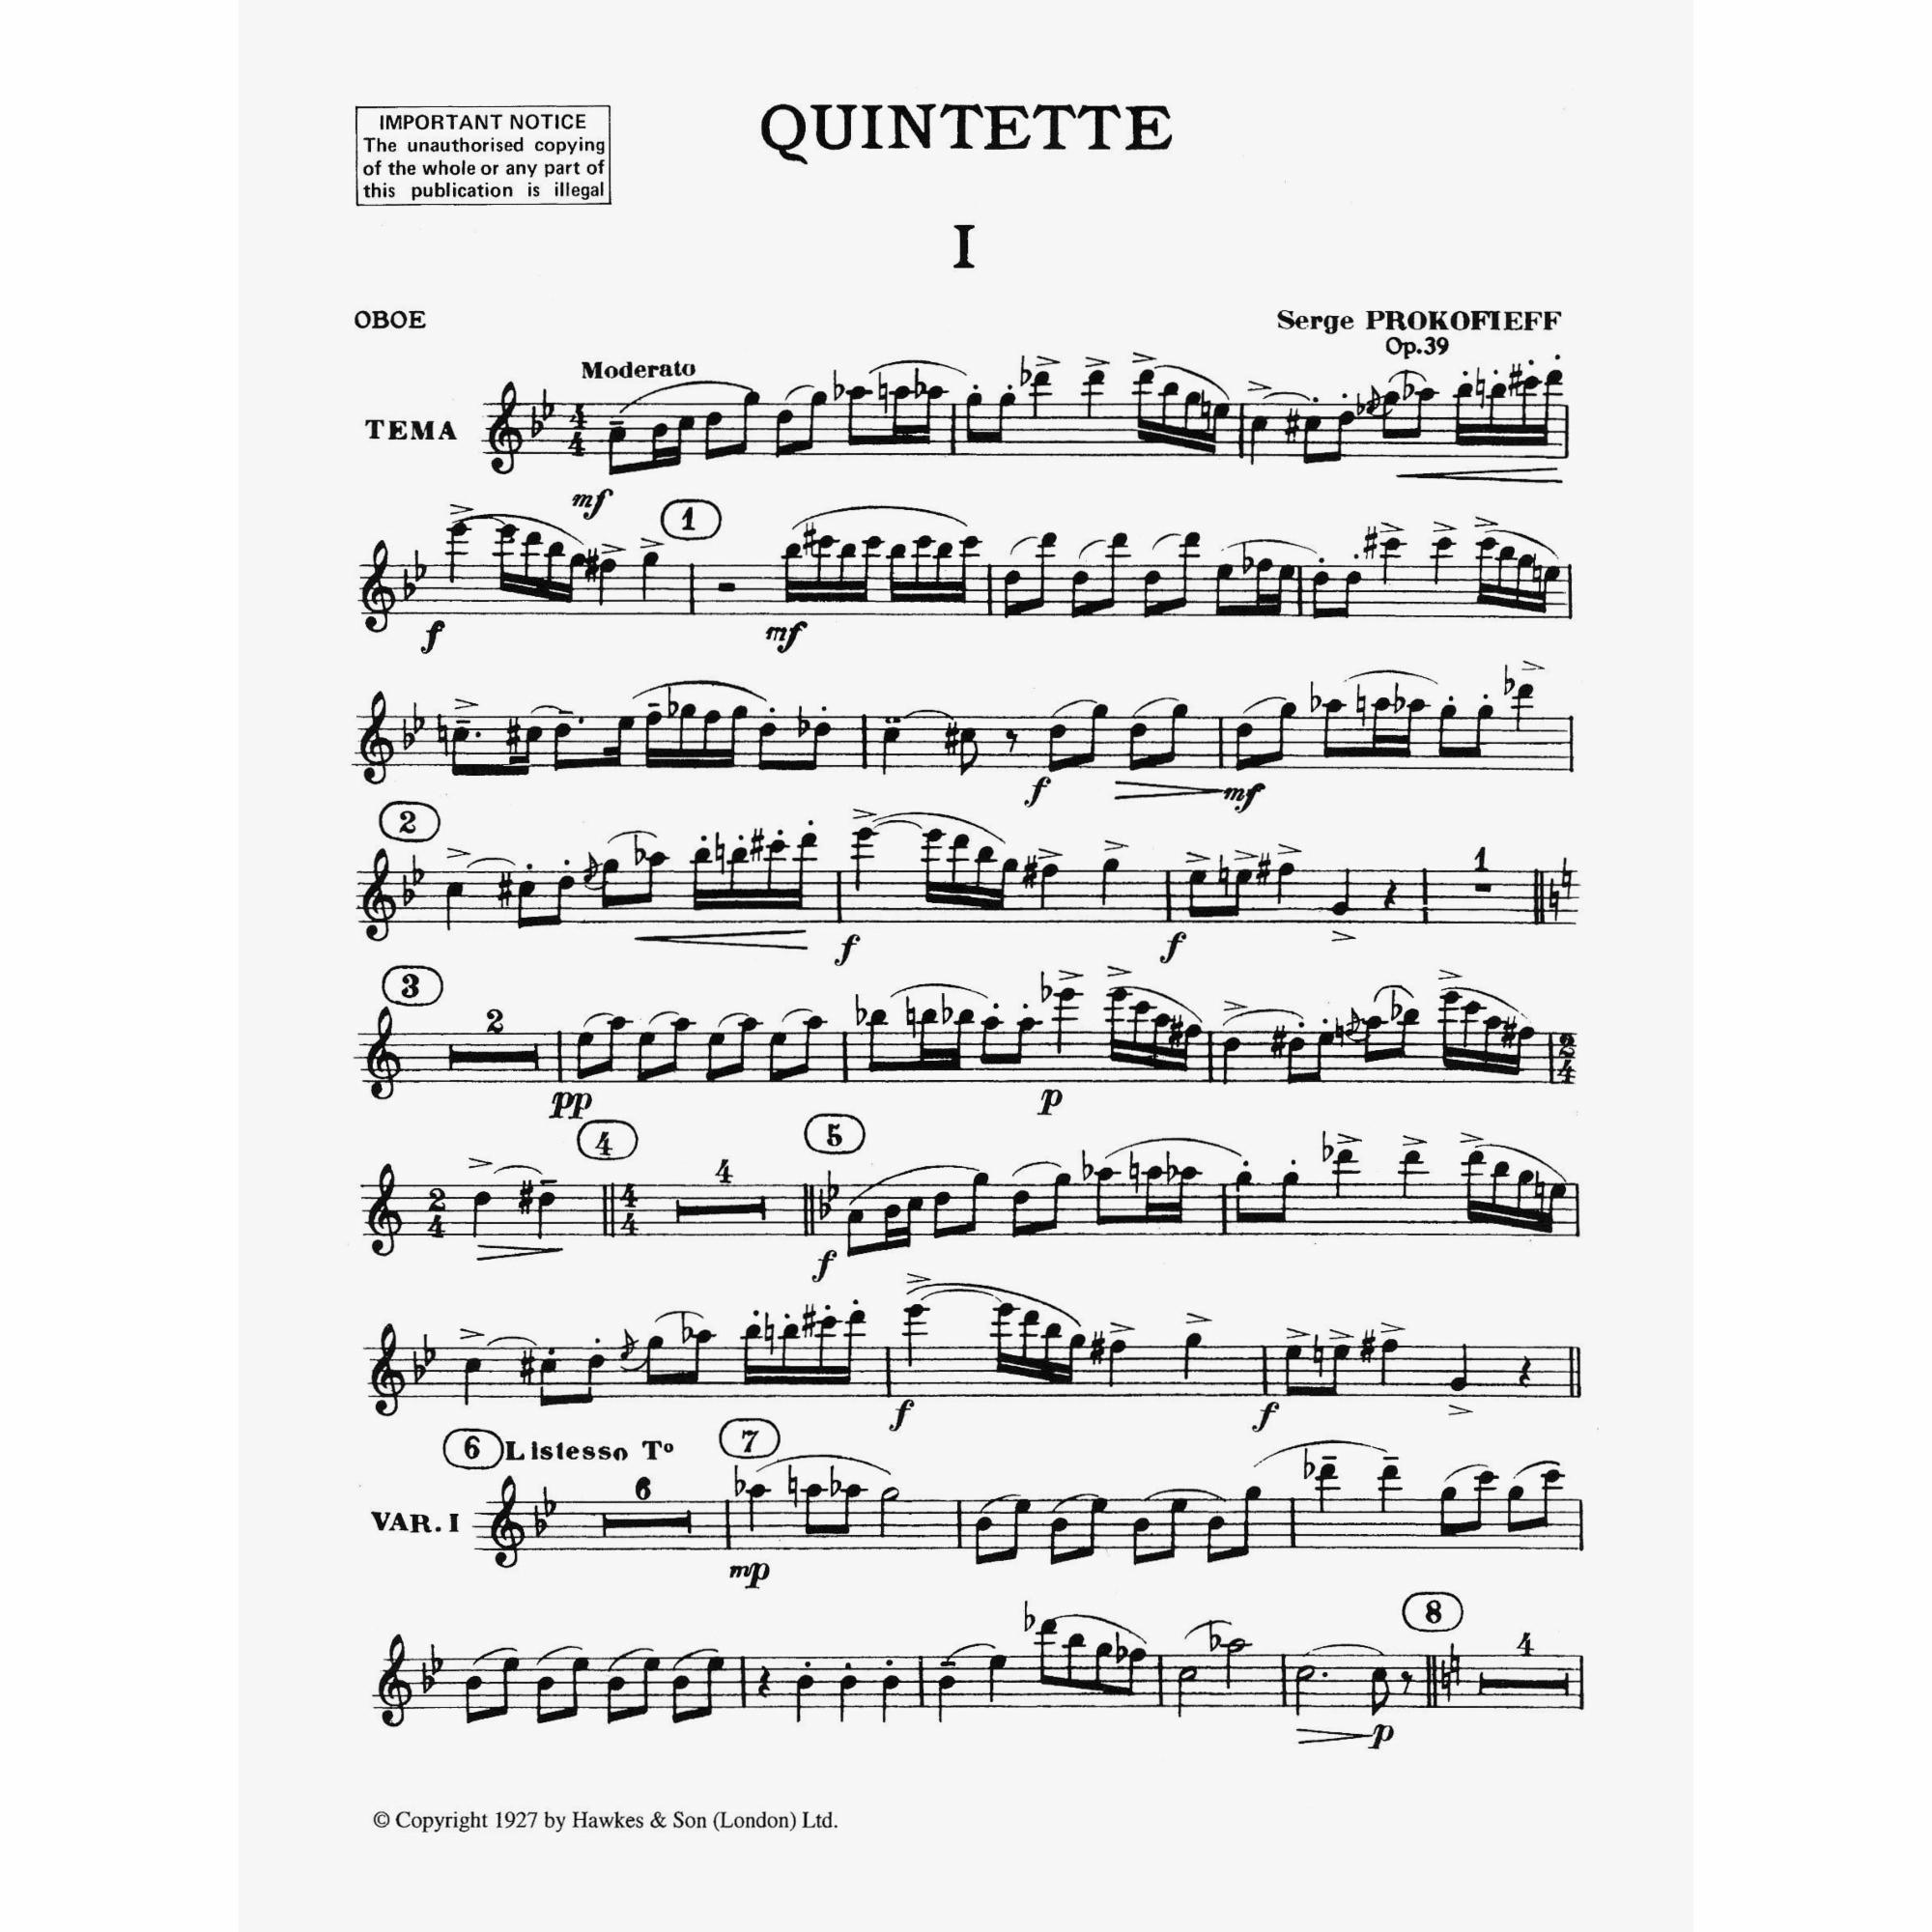 Sample: Oboe (Pg. 1)